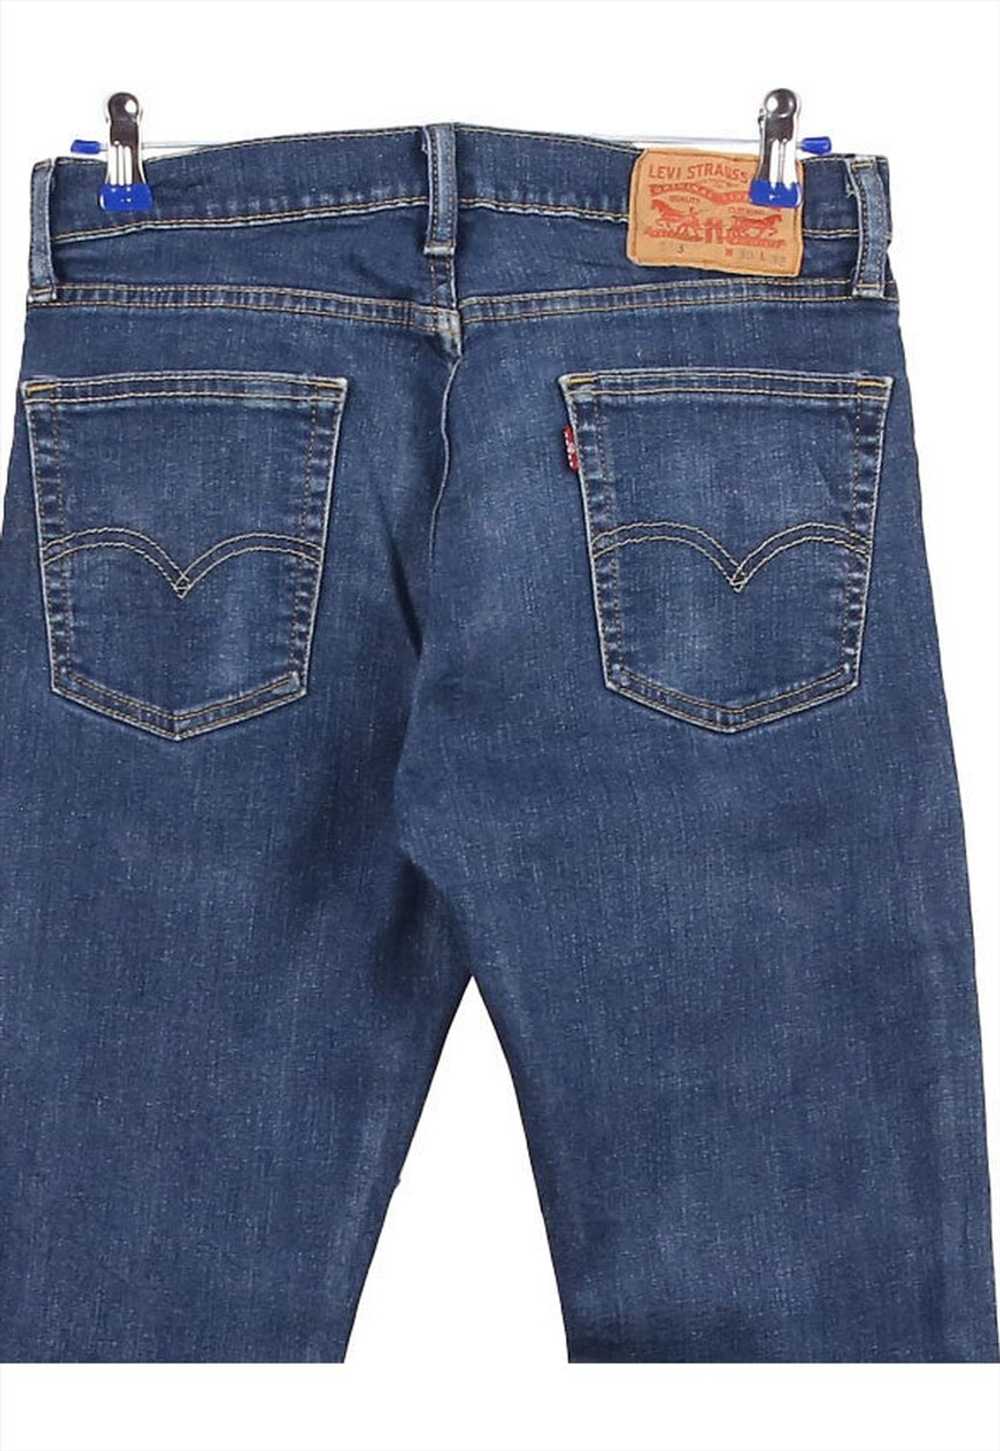 Vintage 90's Levi Strauss & Co. Jeans / Pants 513… - image 3